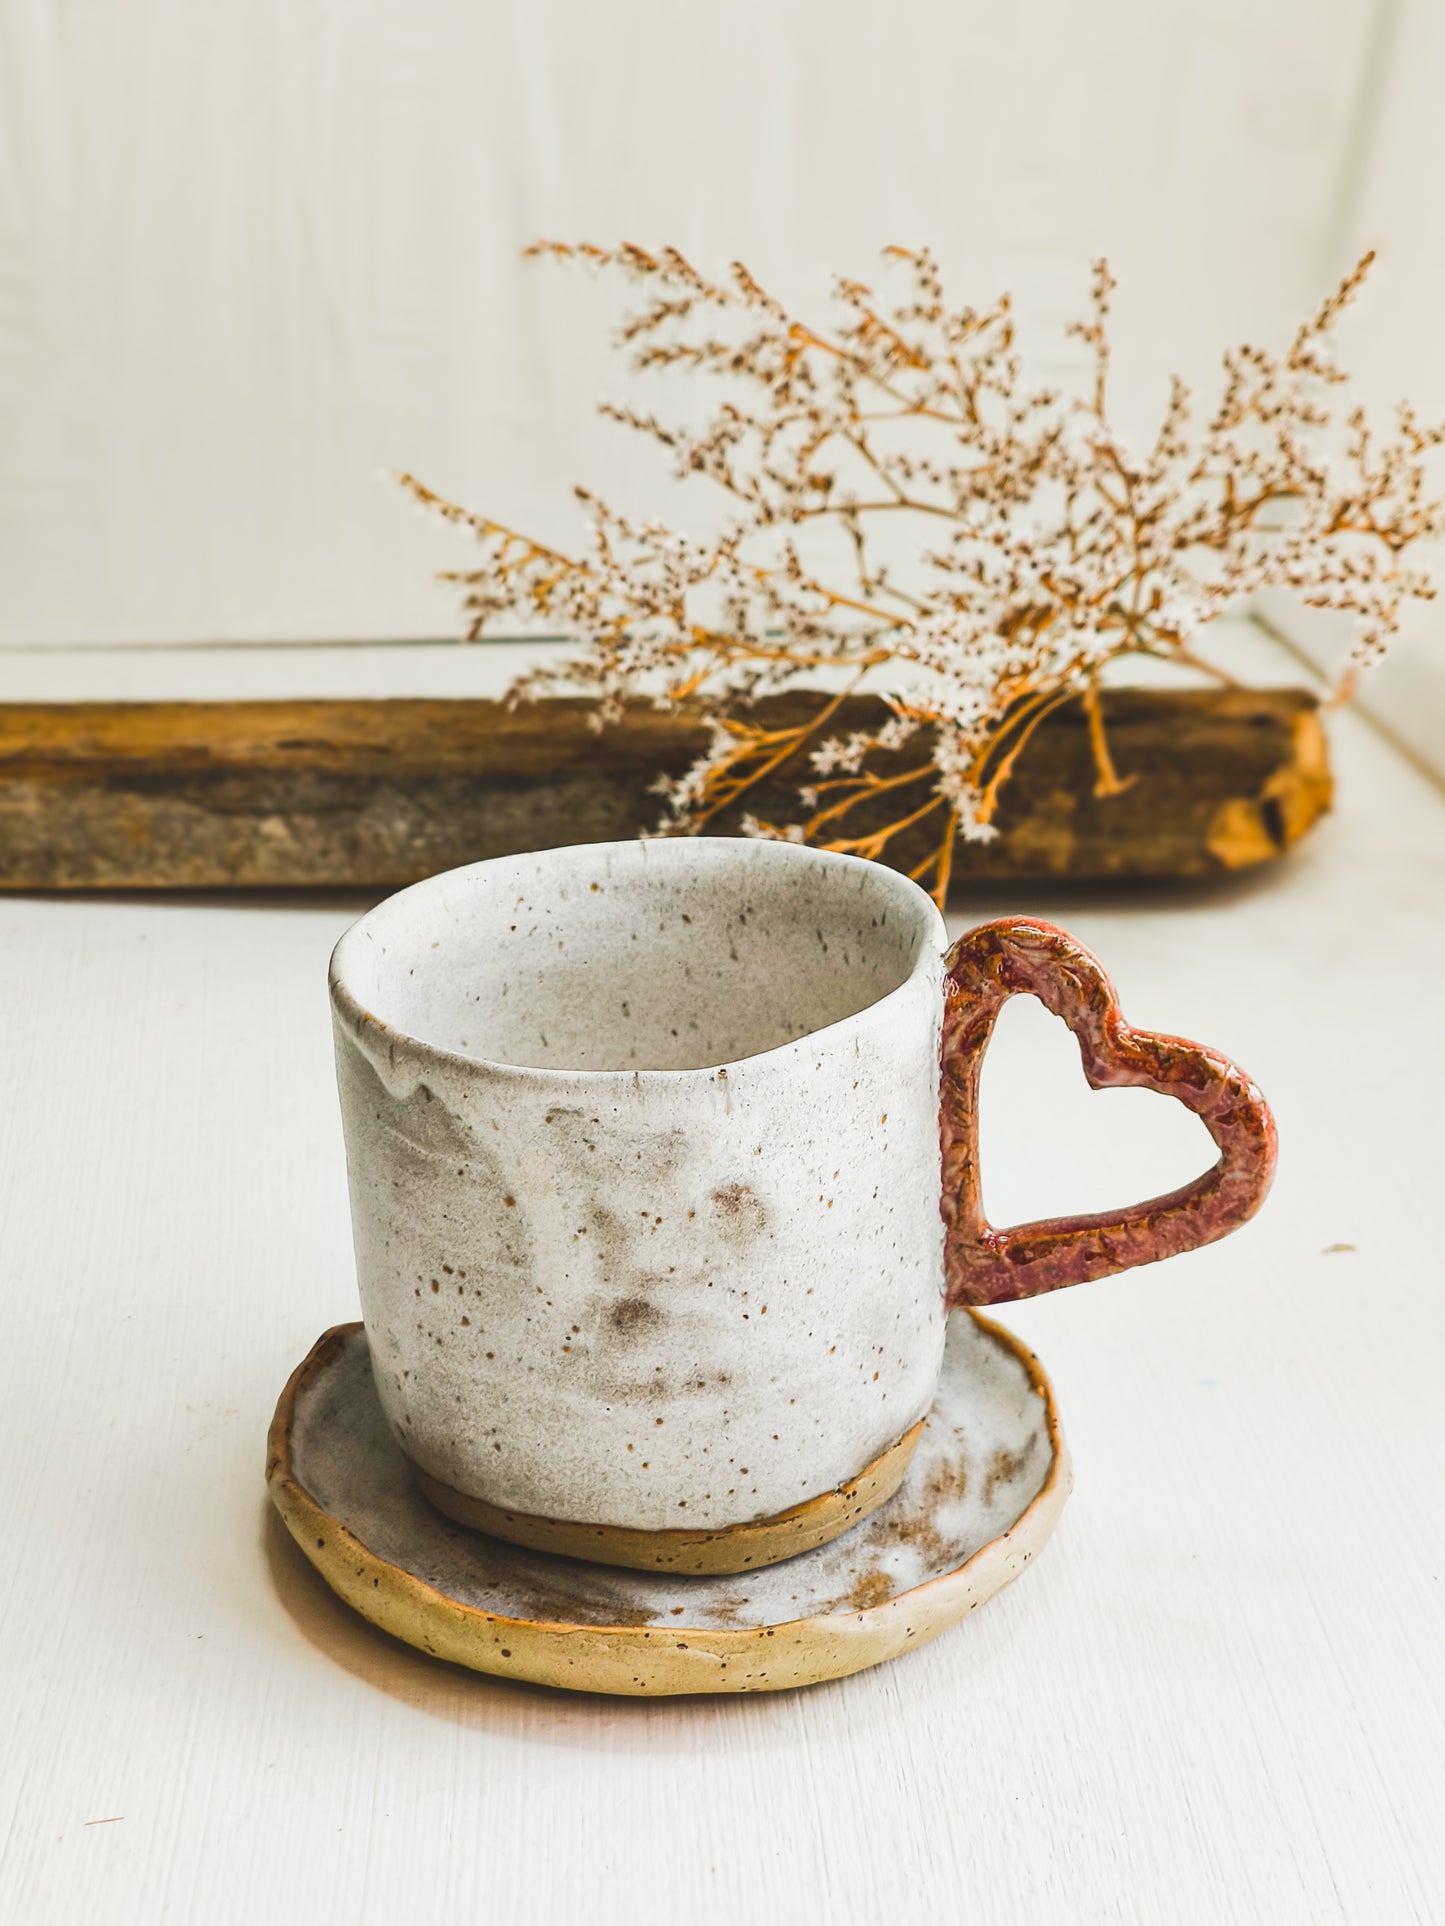 Ceramic coffee or tea mug with a heart-shaped handle